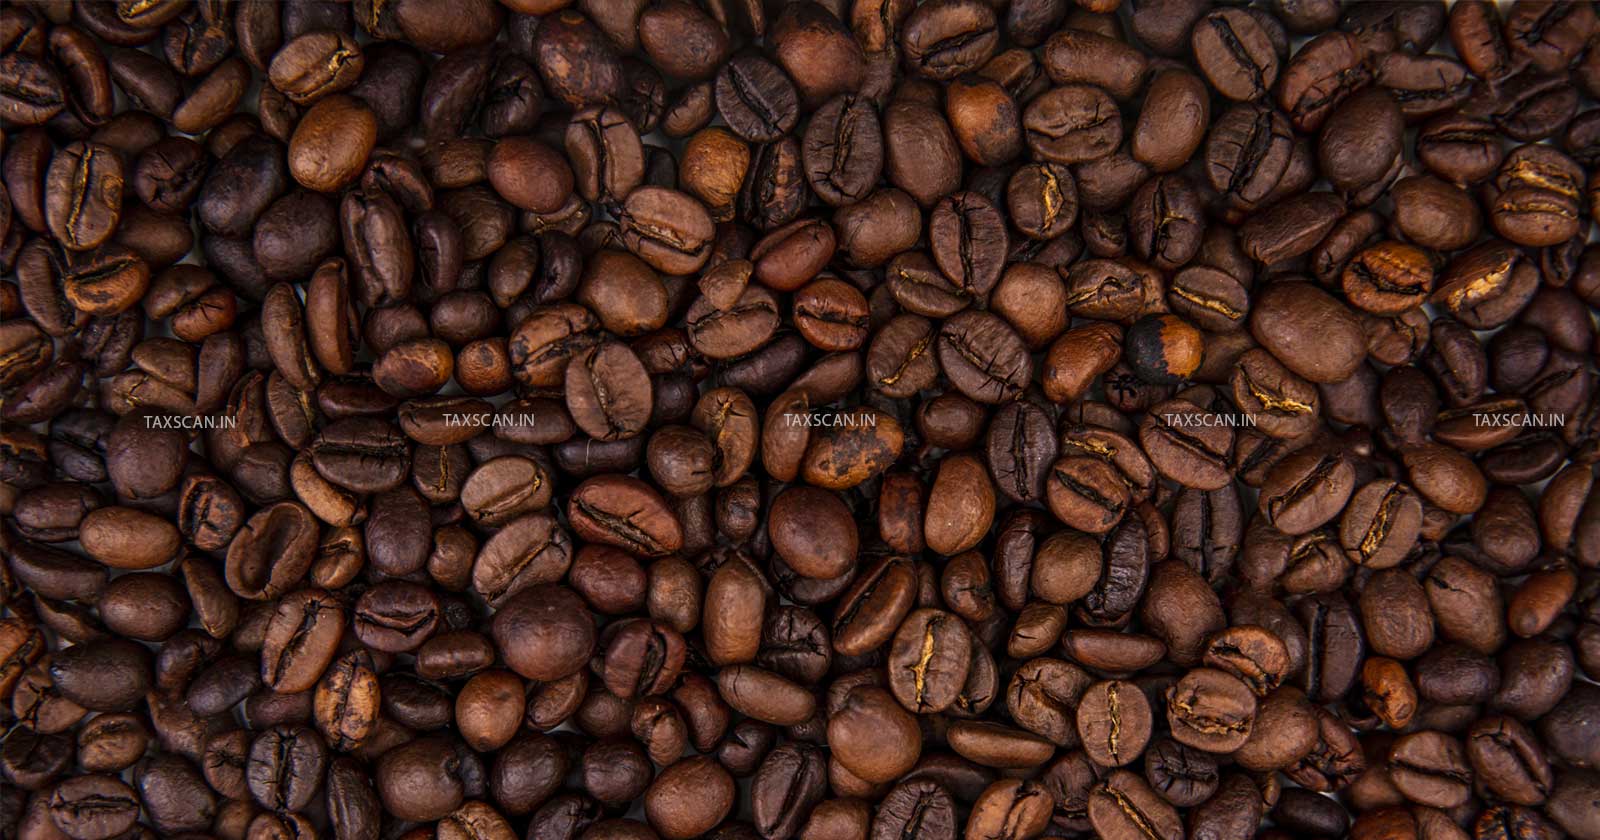 CESTAT - CESTAT Chandigarh - Coffee beans import - Customs exemption notification - Customs duty exemption - taxscan